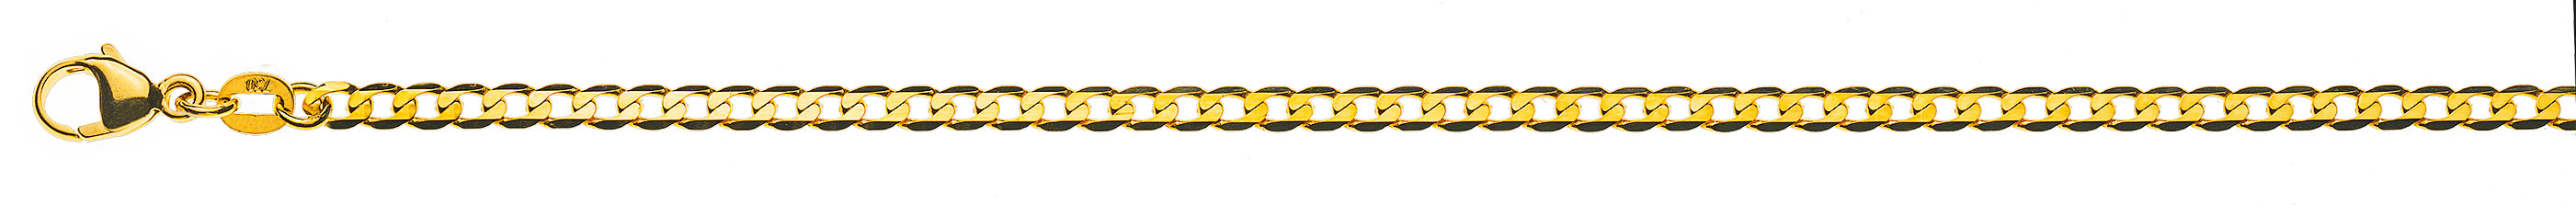 AURONOS Prestige Necklace yellow gold 18K curb chain extra flat diamond 50cm 3.1mm